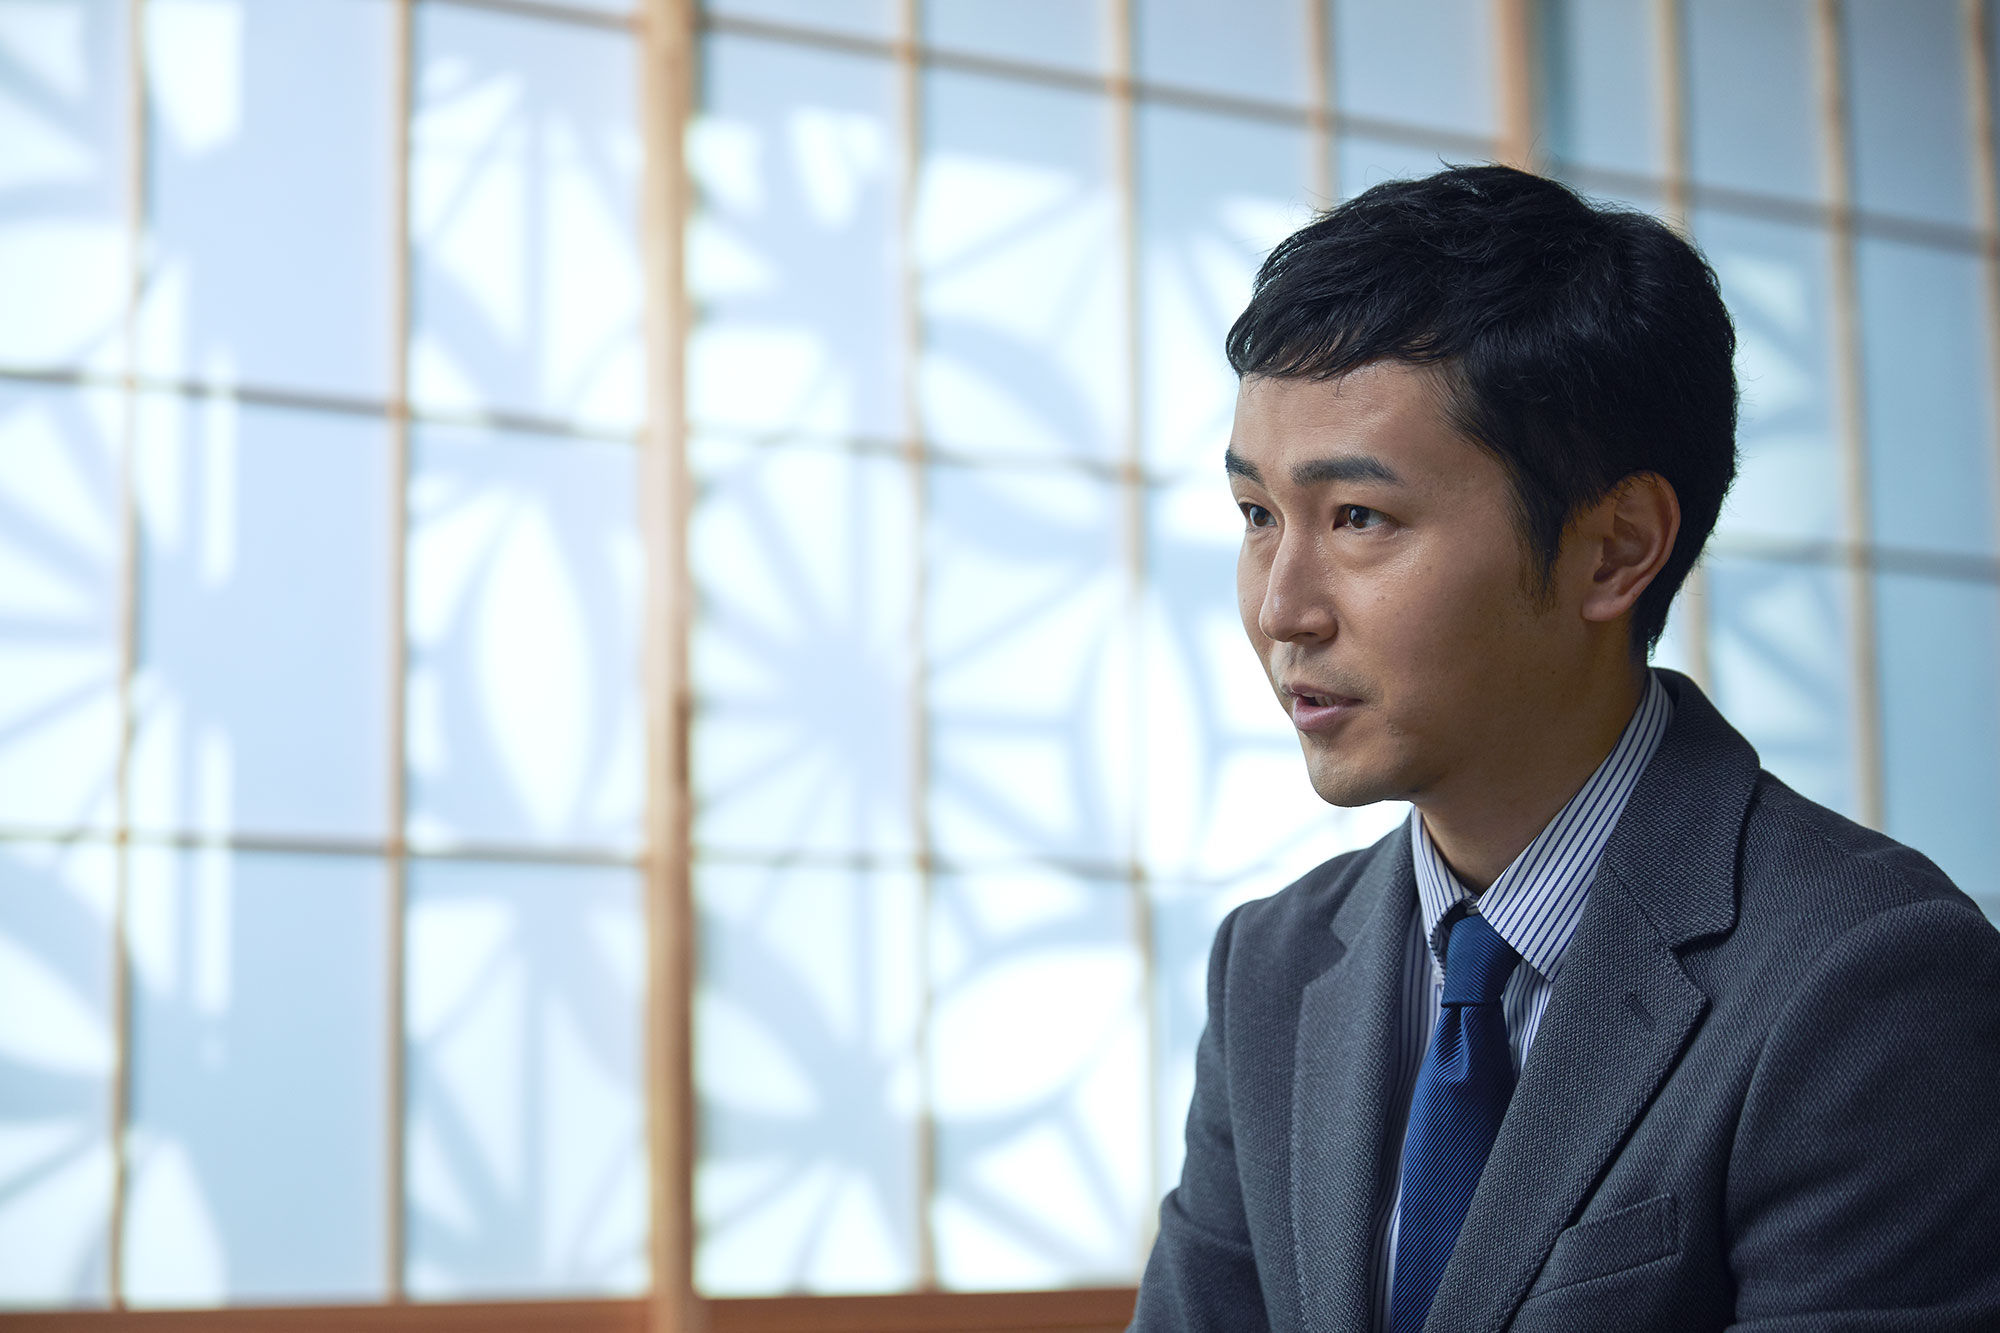 Kiyotaka Sakai wearing a grey suit and striped shirt with tie.